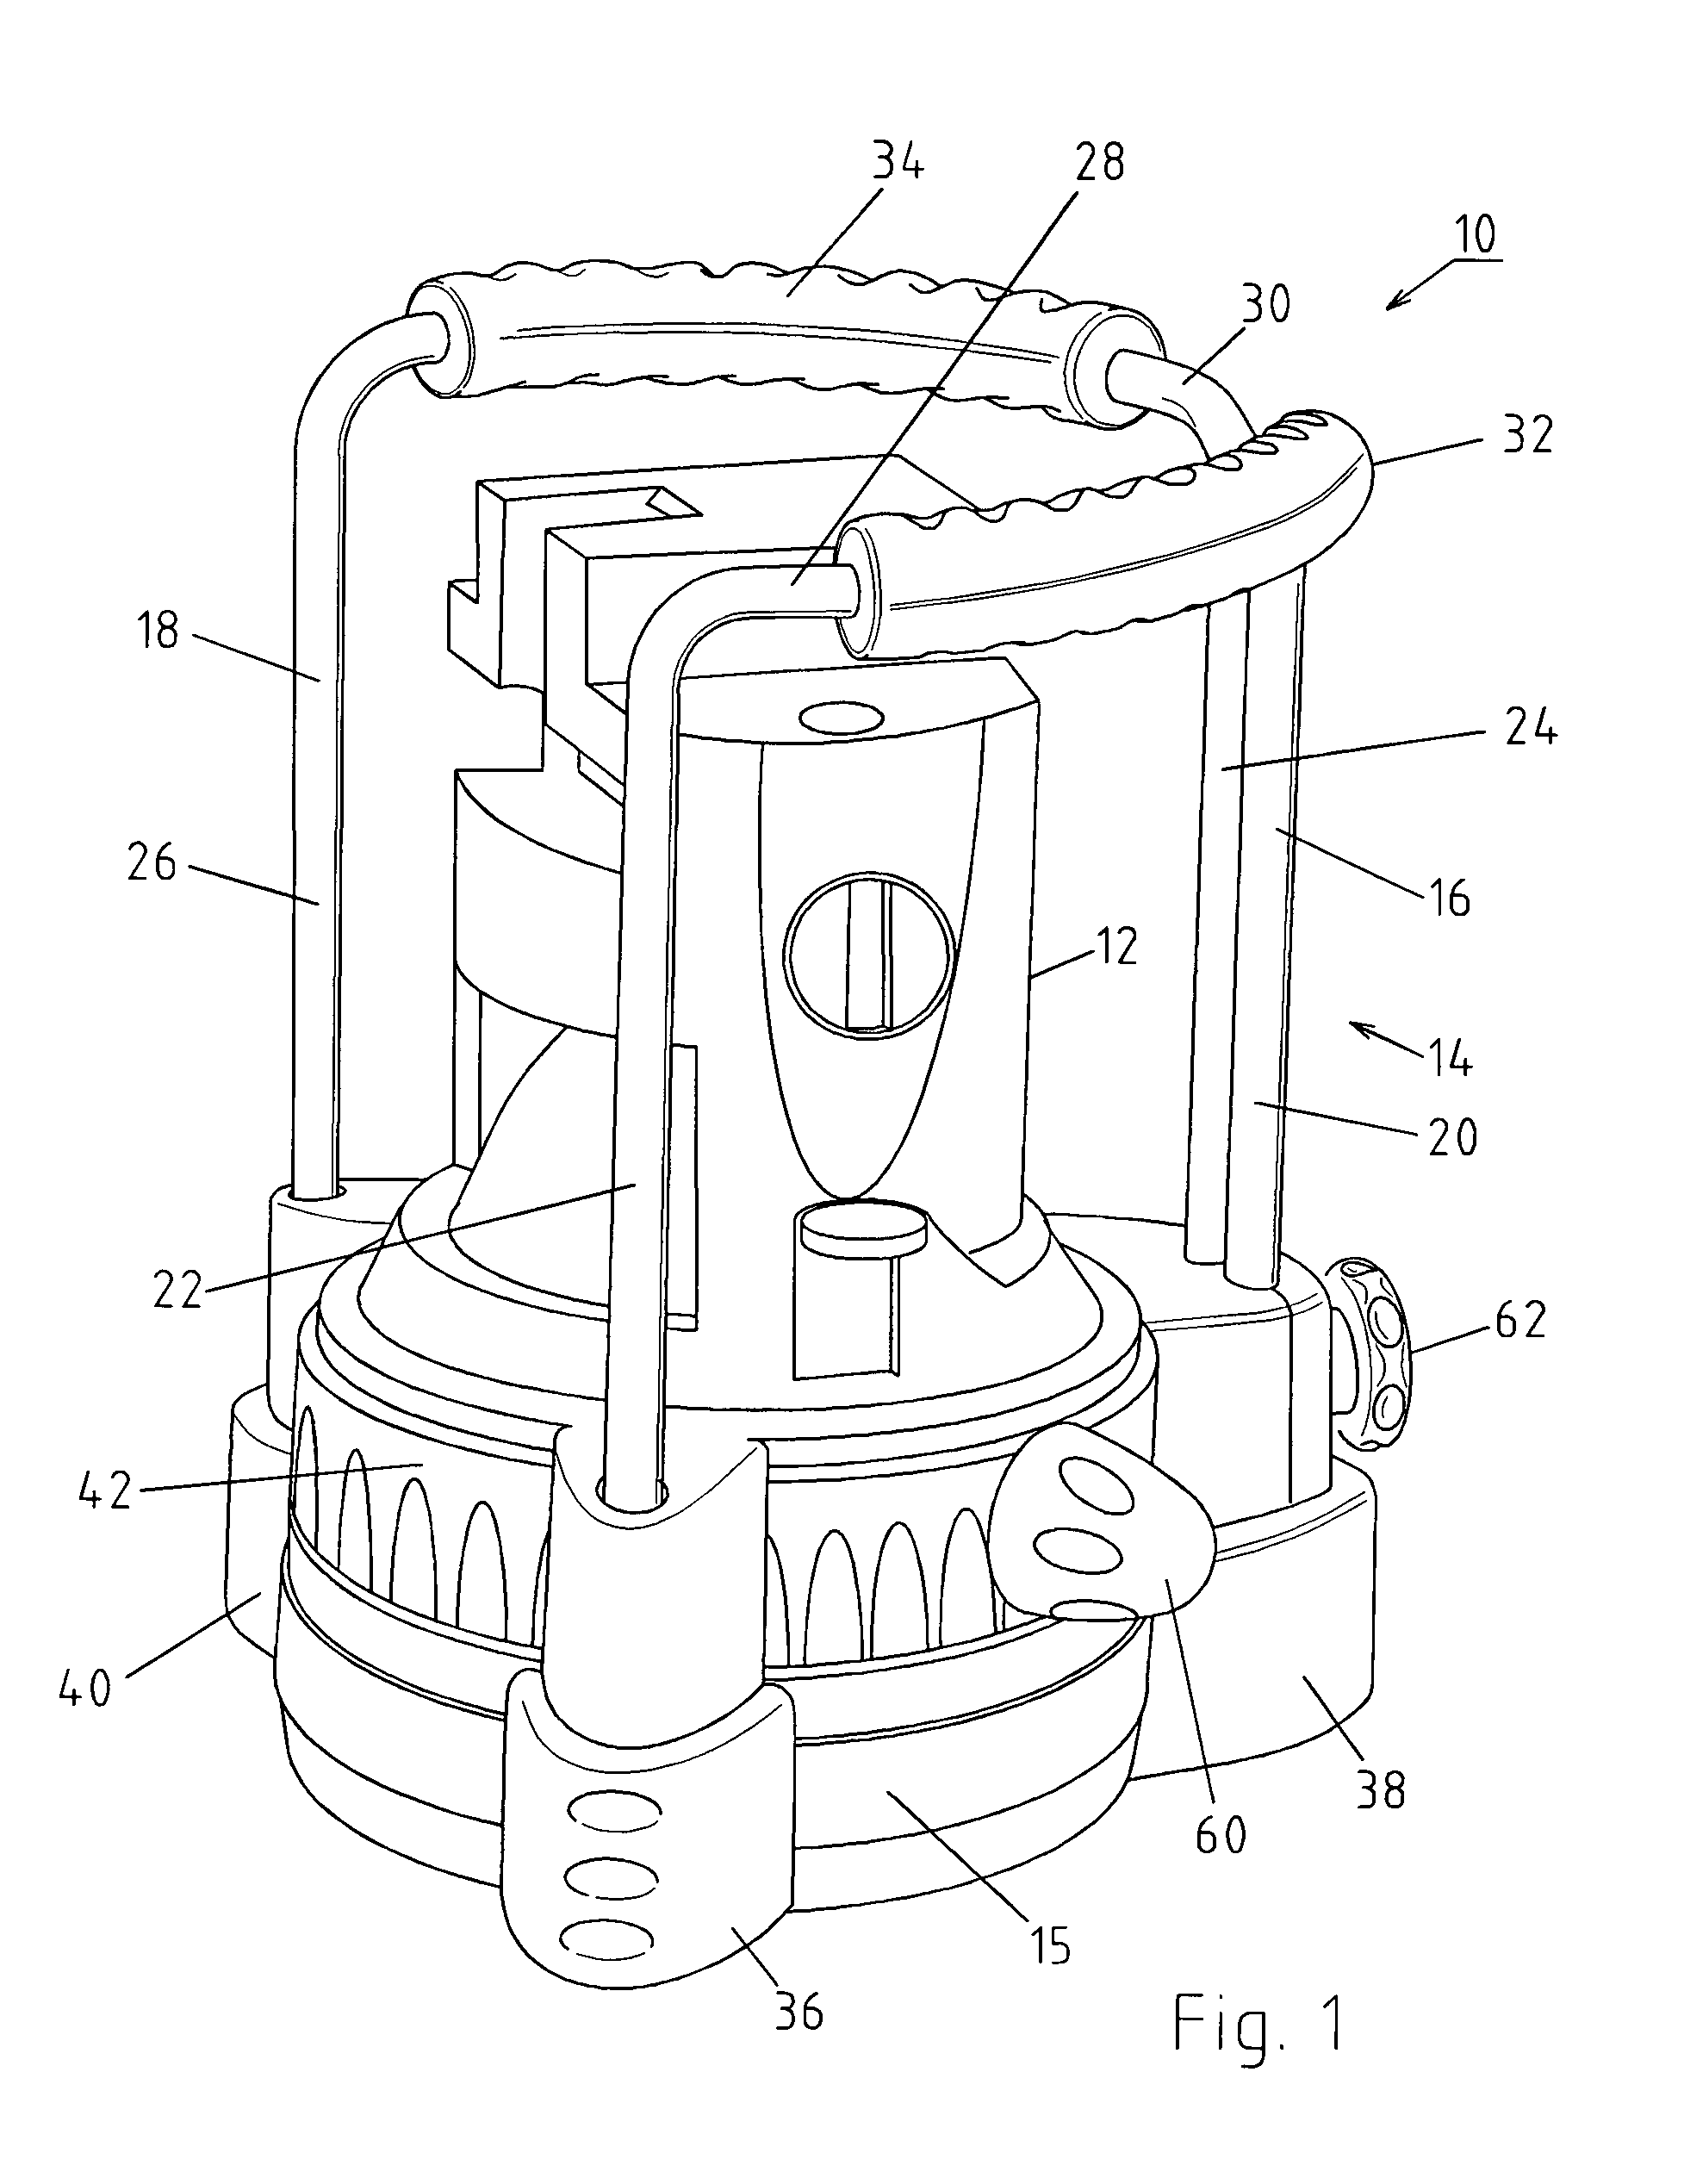 Laser apparatus such as a construction laser apparatus